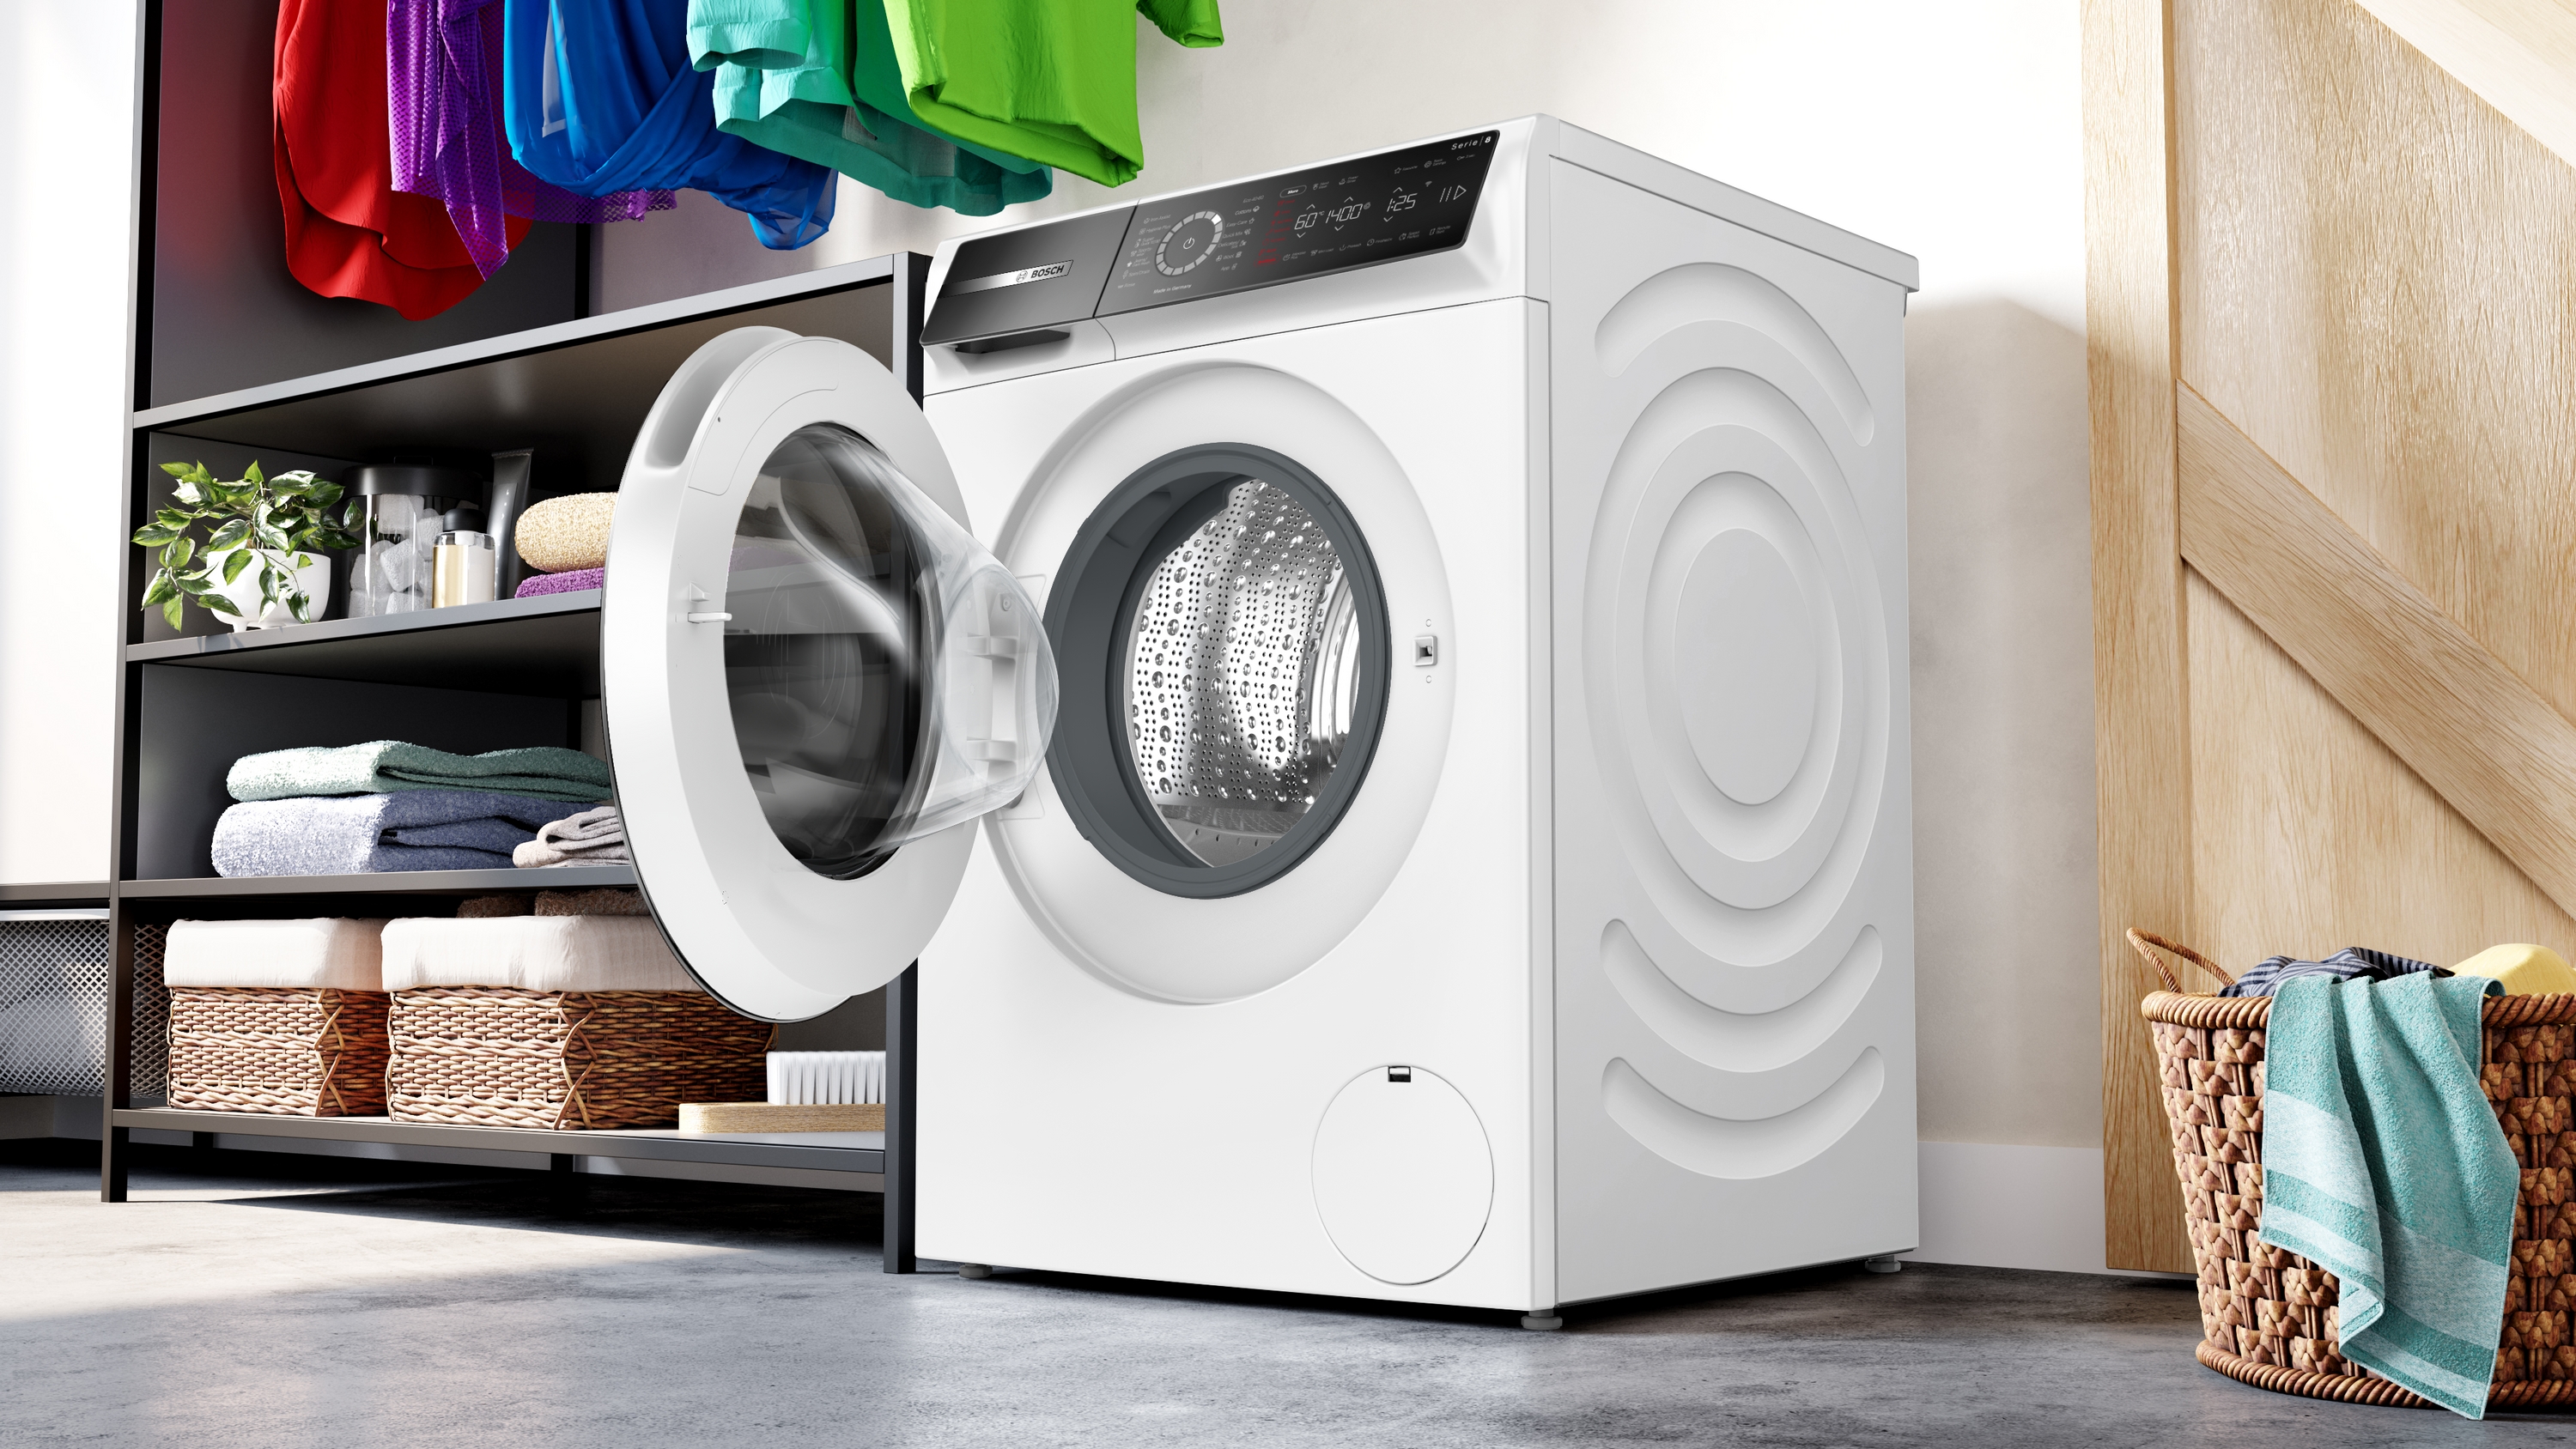 Serija 8, Mašina za pranje veša, punjenje spreda, 10 kg, 1400 okr, WGB25400BY